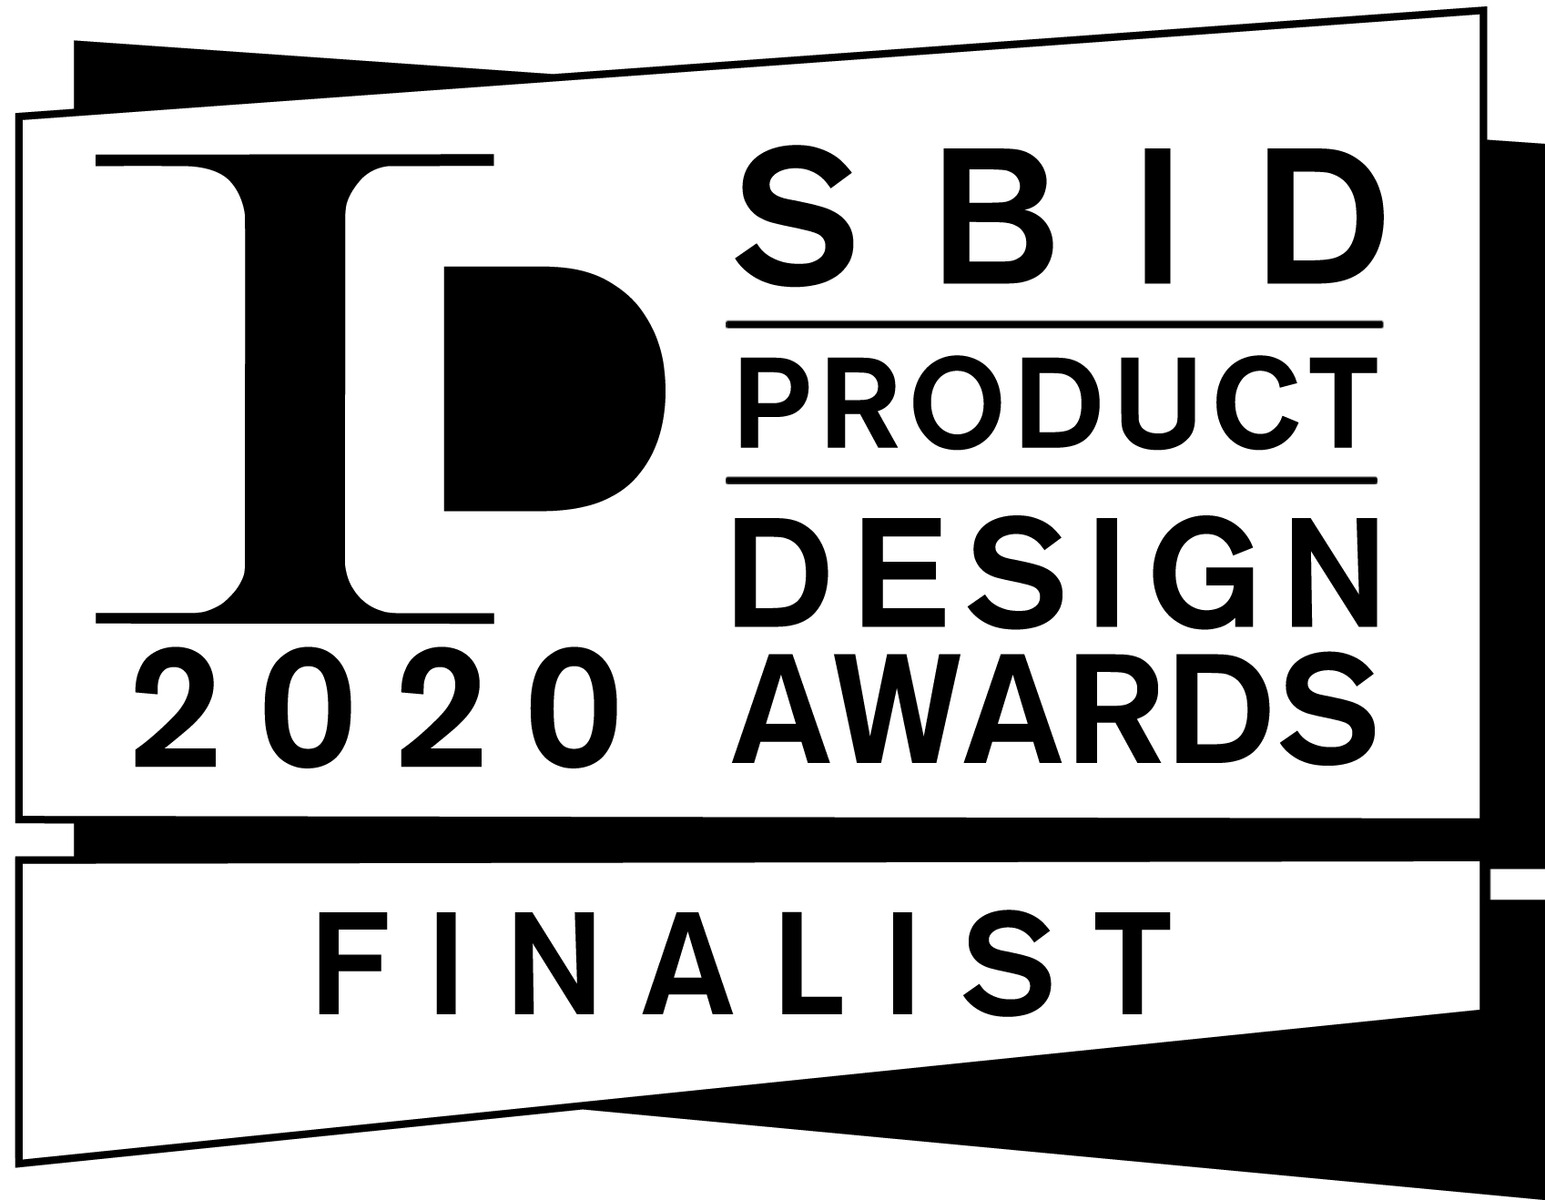 SBID Awards